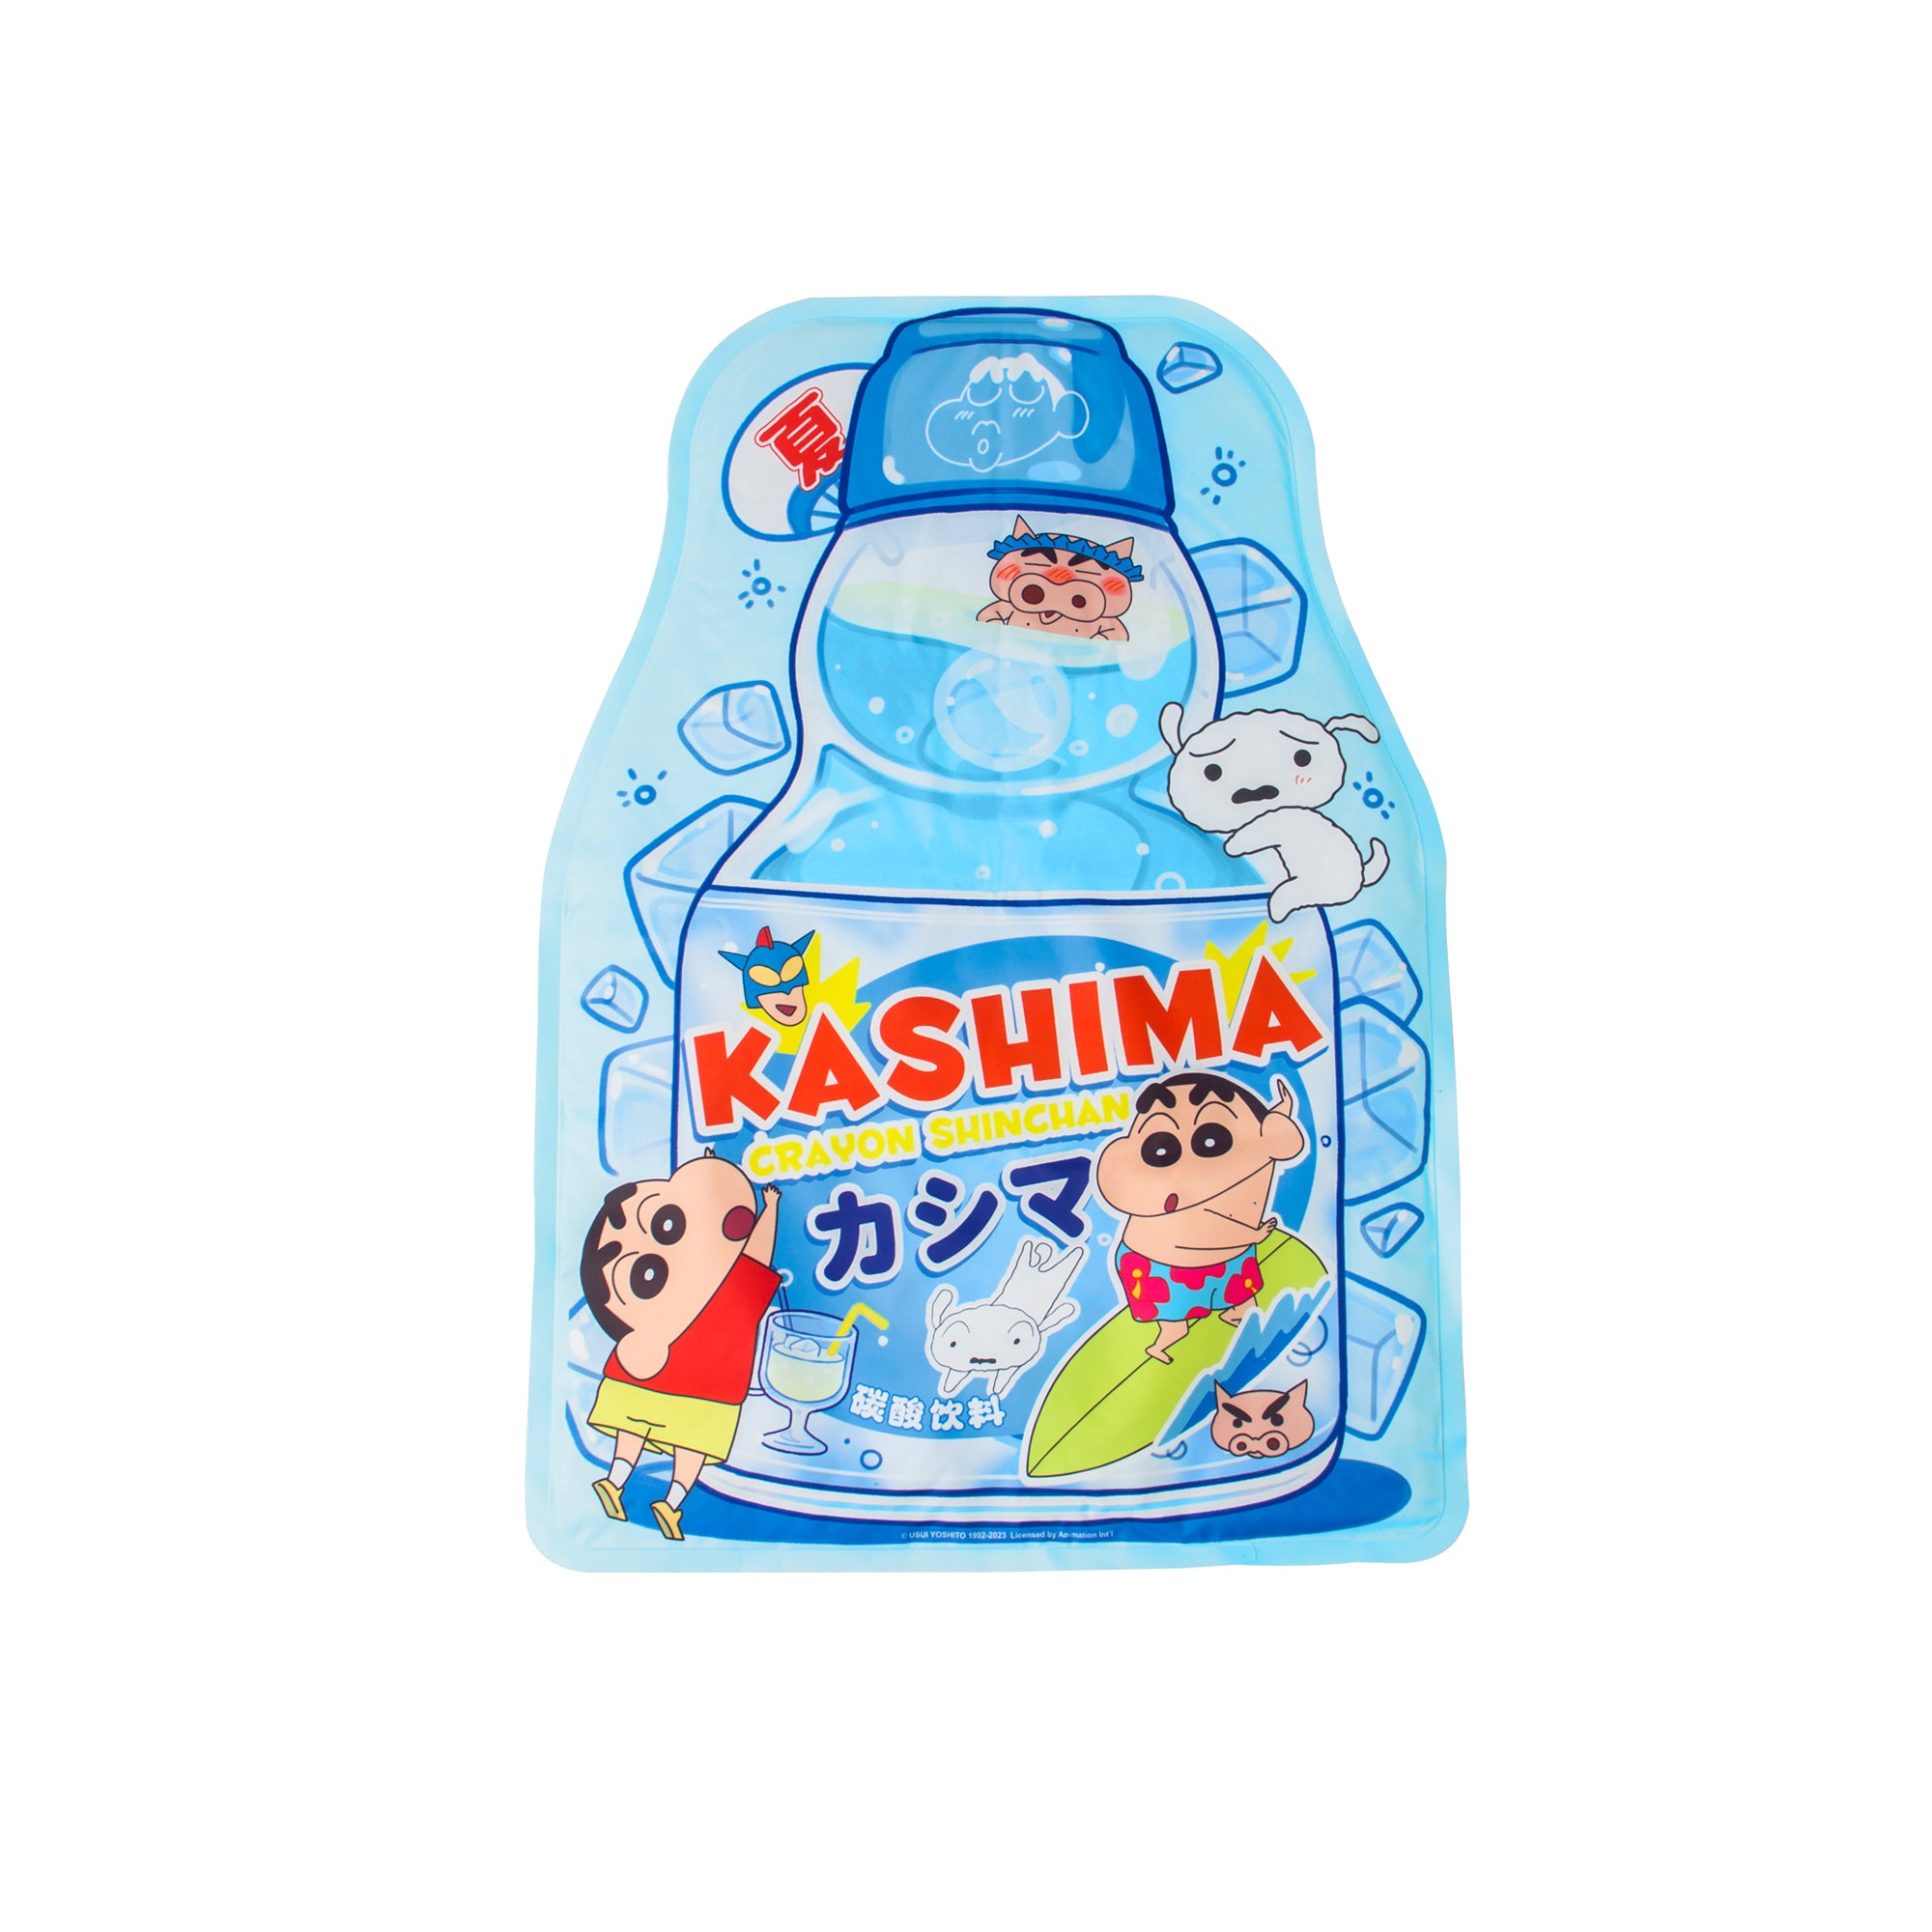 Kashima x Crayon Shin-chan Ice Mat-Only sell in China mainland